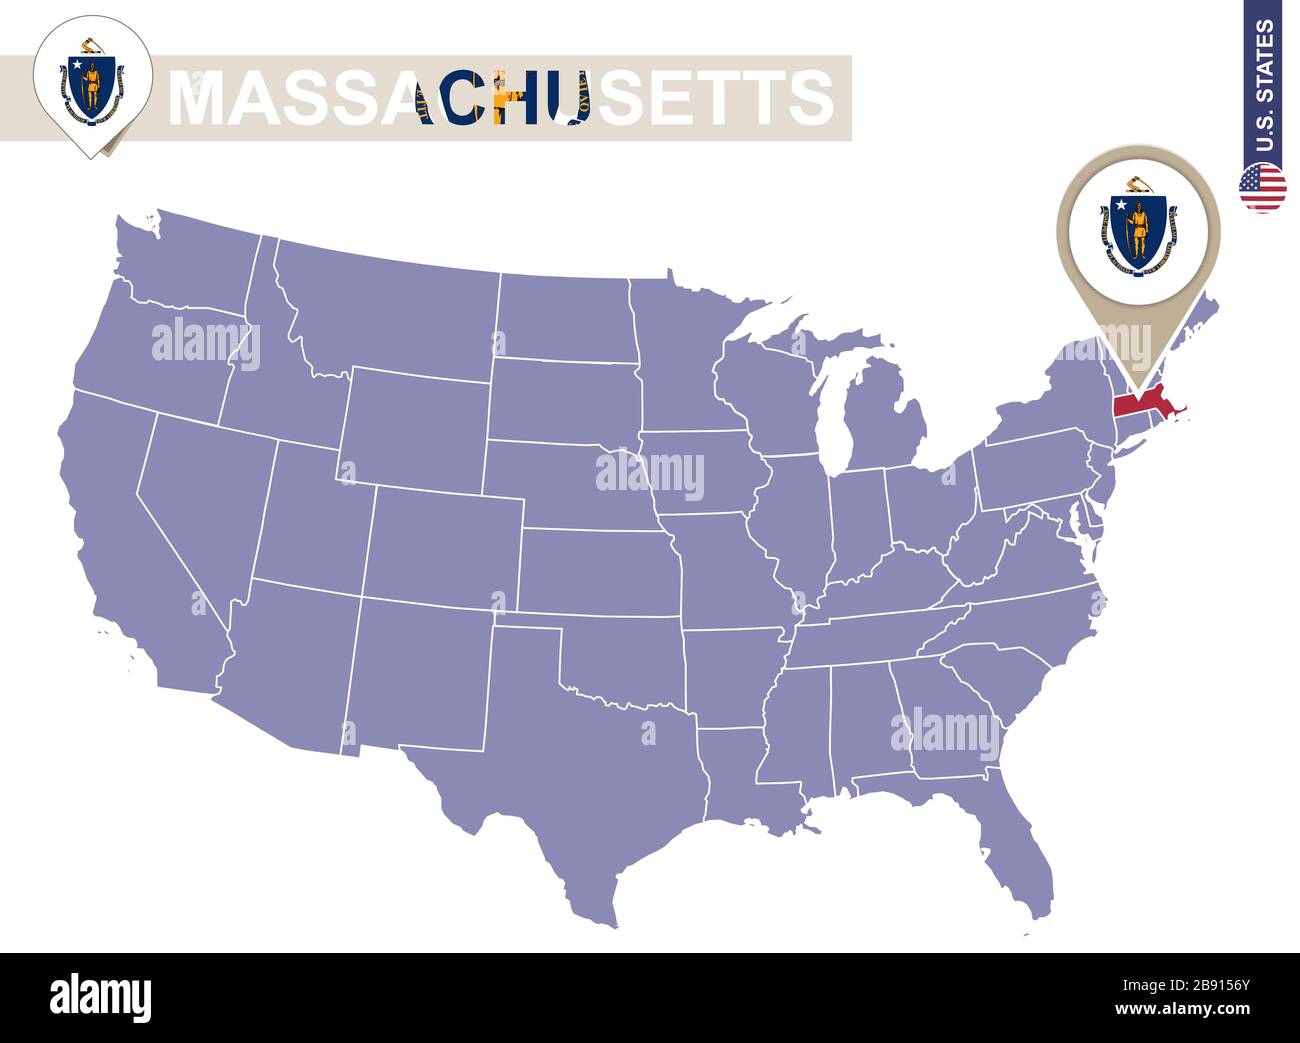 Massachusetts State on USA Map. Massachusetts flag and map. US States. Stock Vector